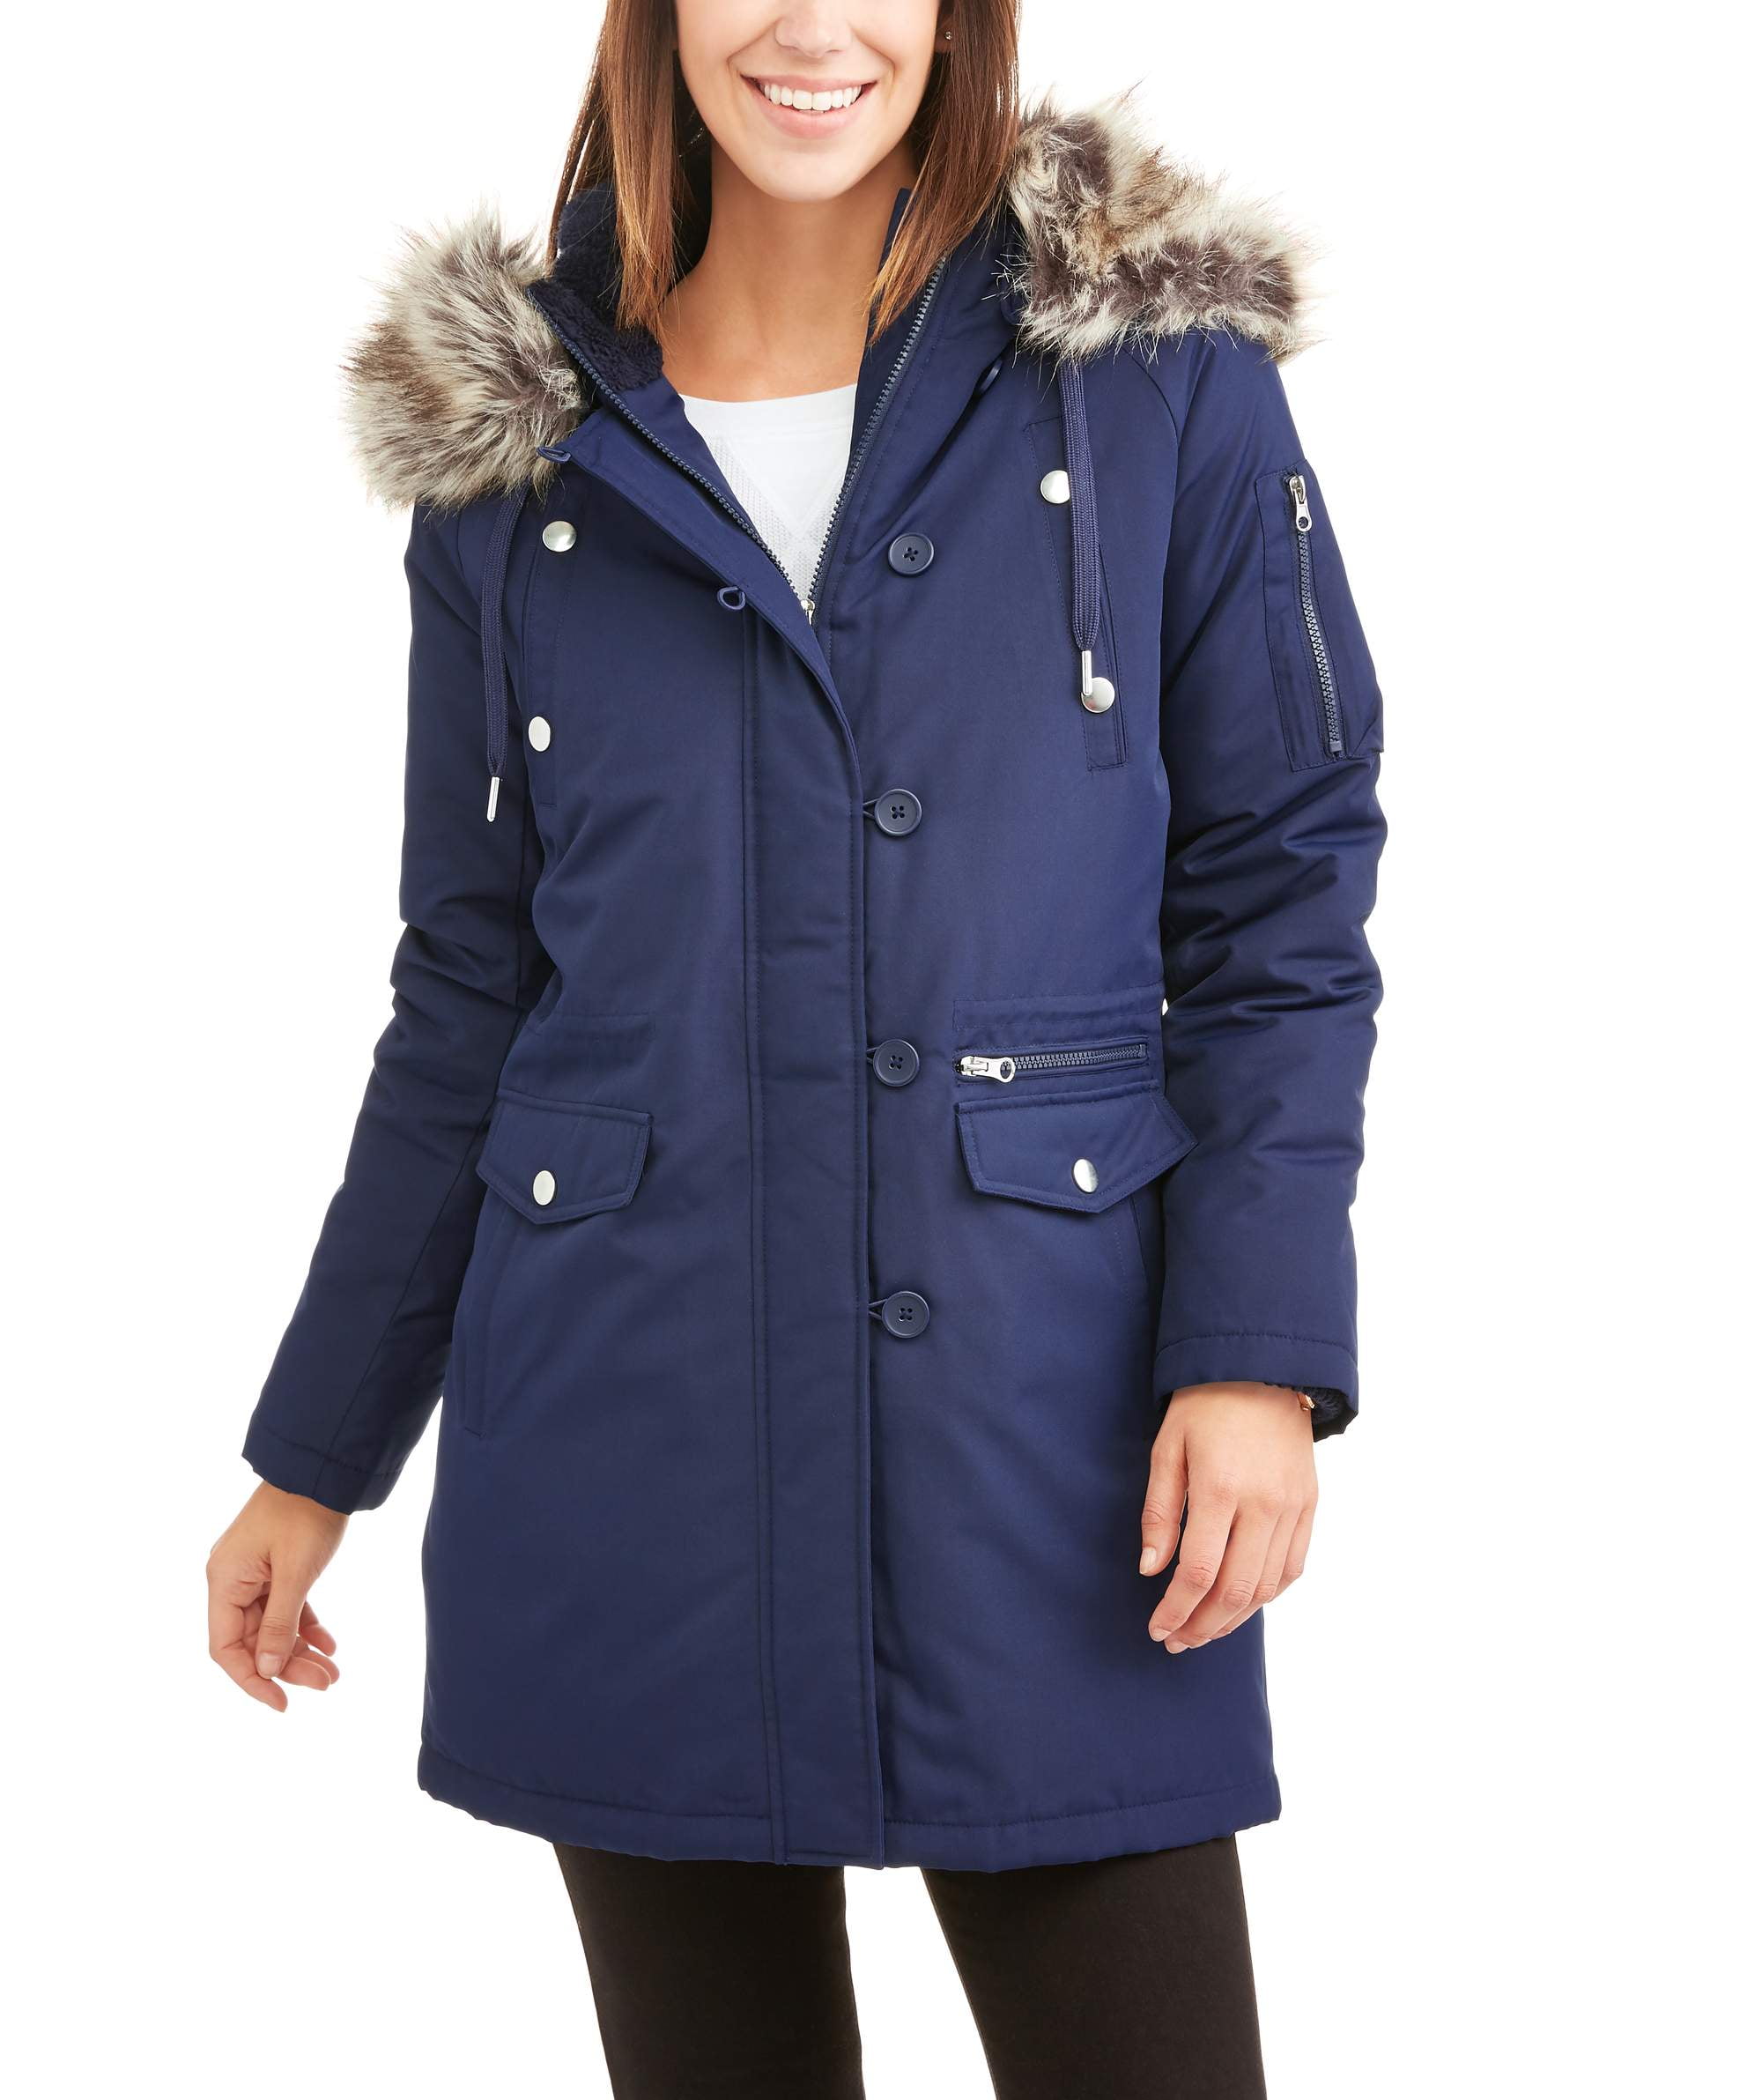 Swiss Tech Women's Parka Jacket With Faux Fur-Trim Hood - Walmart.com